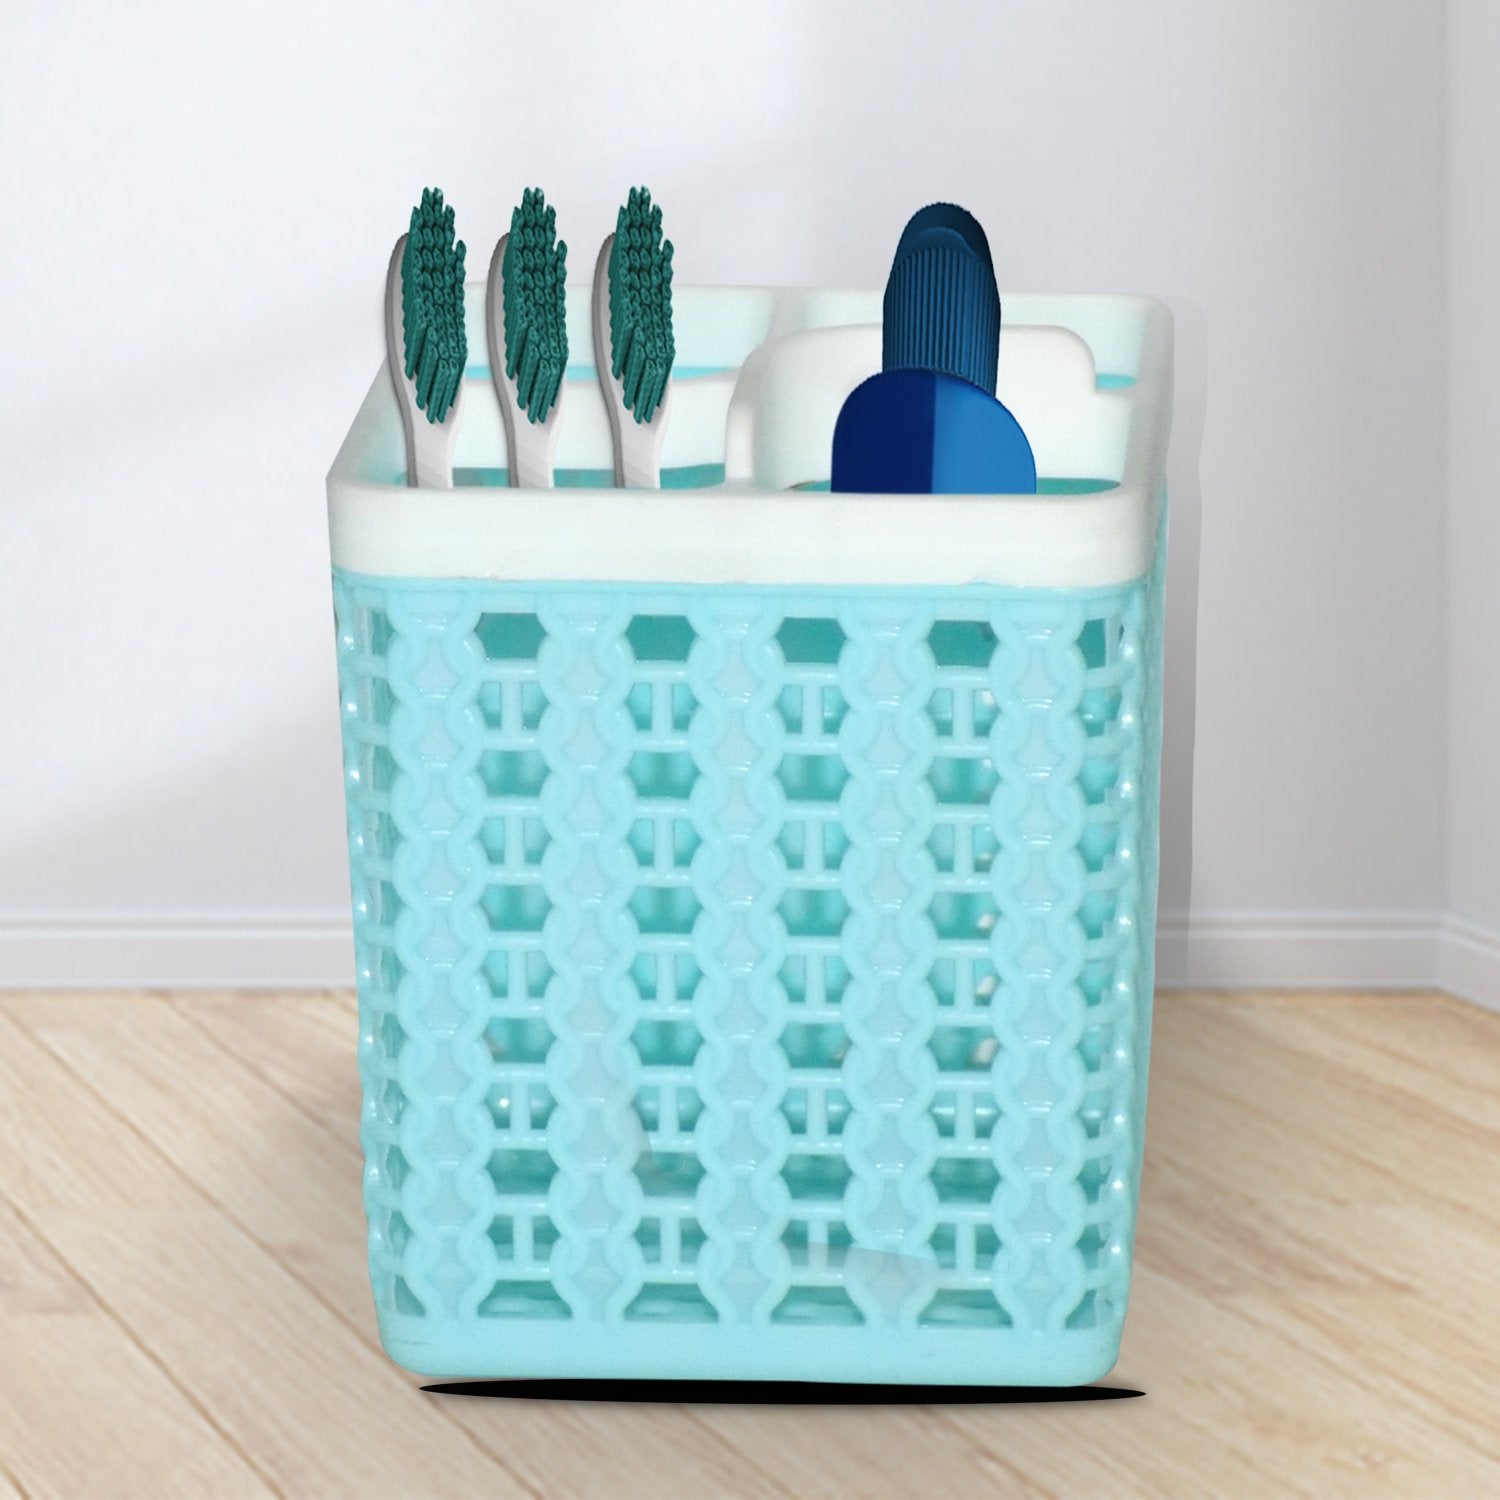 3696 Toothbrush Toothpaste Stand Holder Bathroom Storage - SkyShopy